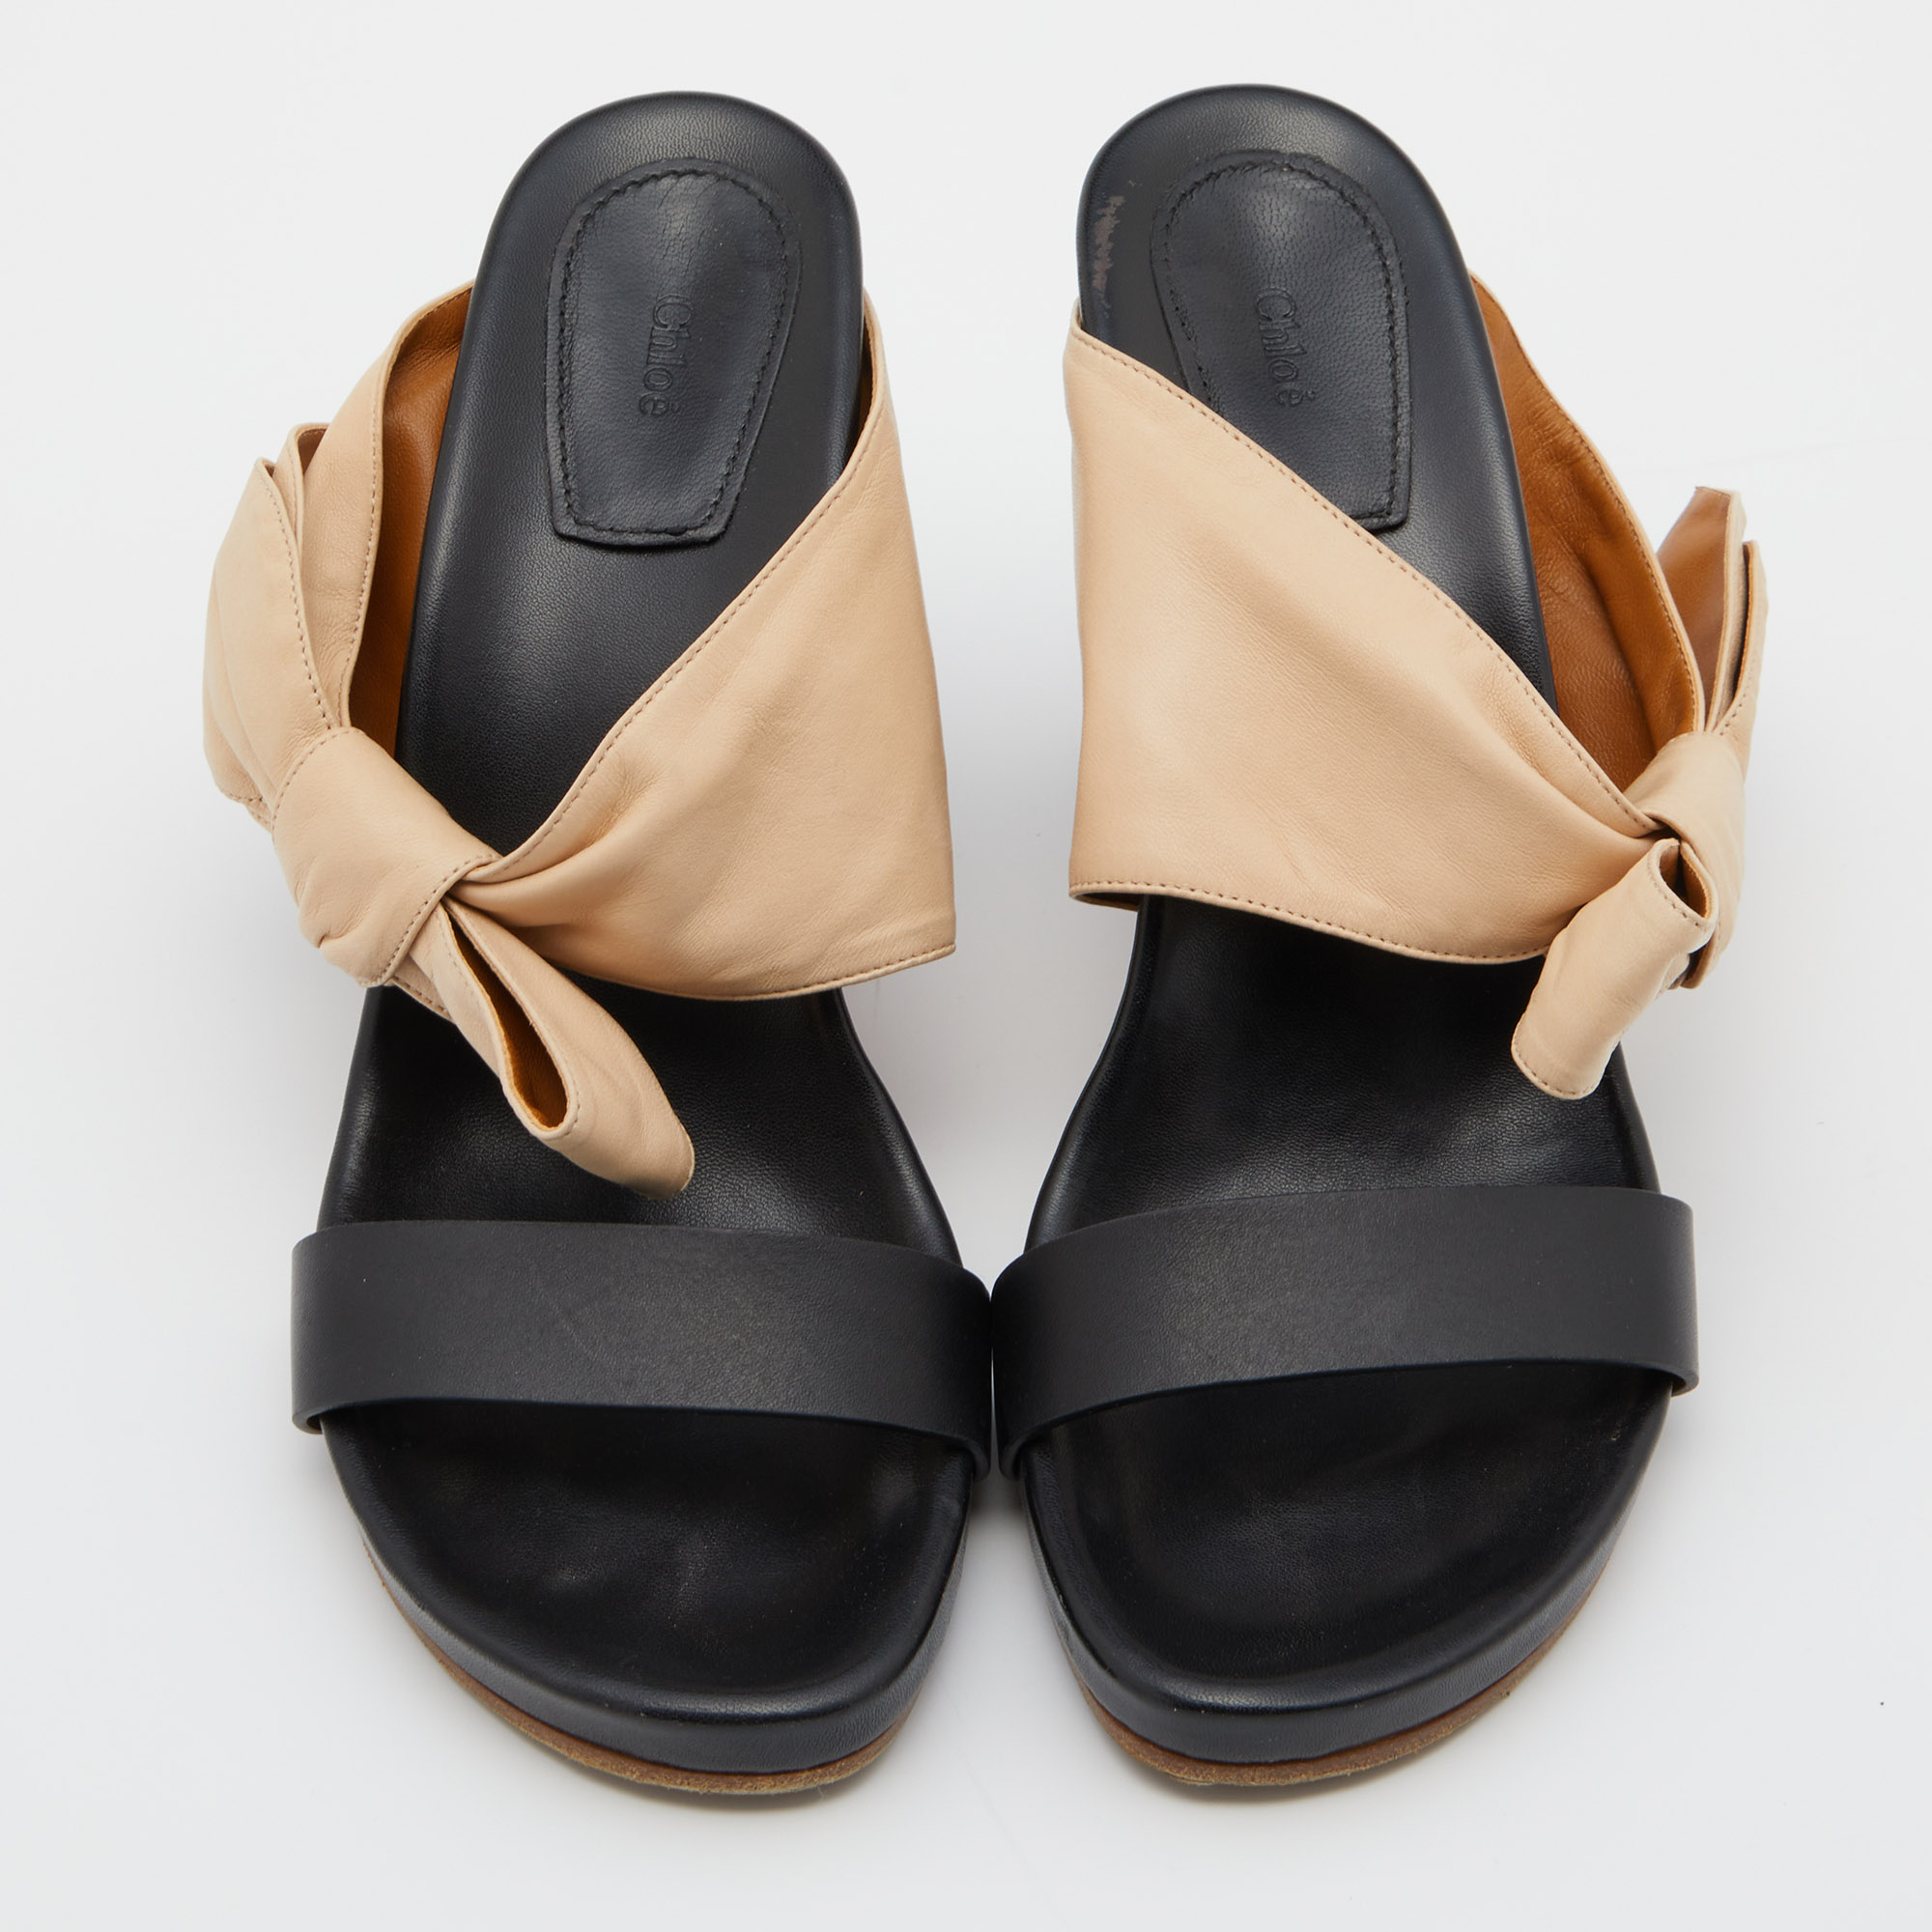 Chloe Black/Beige Leather Fod Flower Block Heel Sandals Size 40